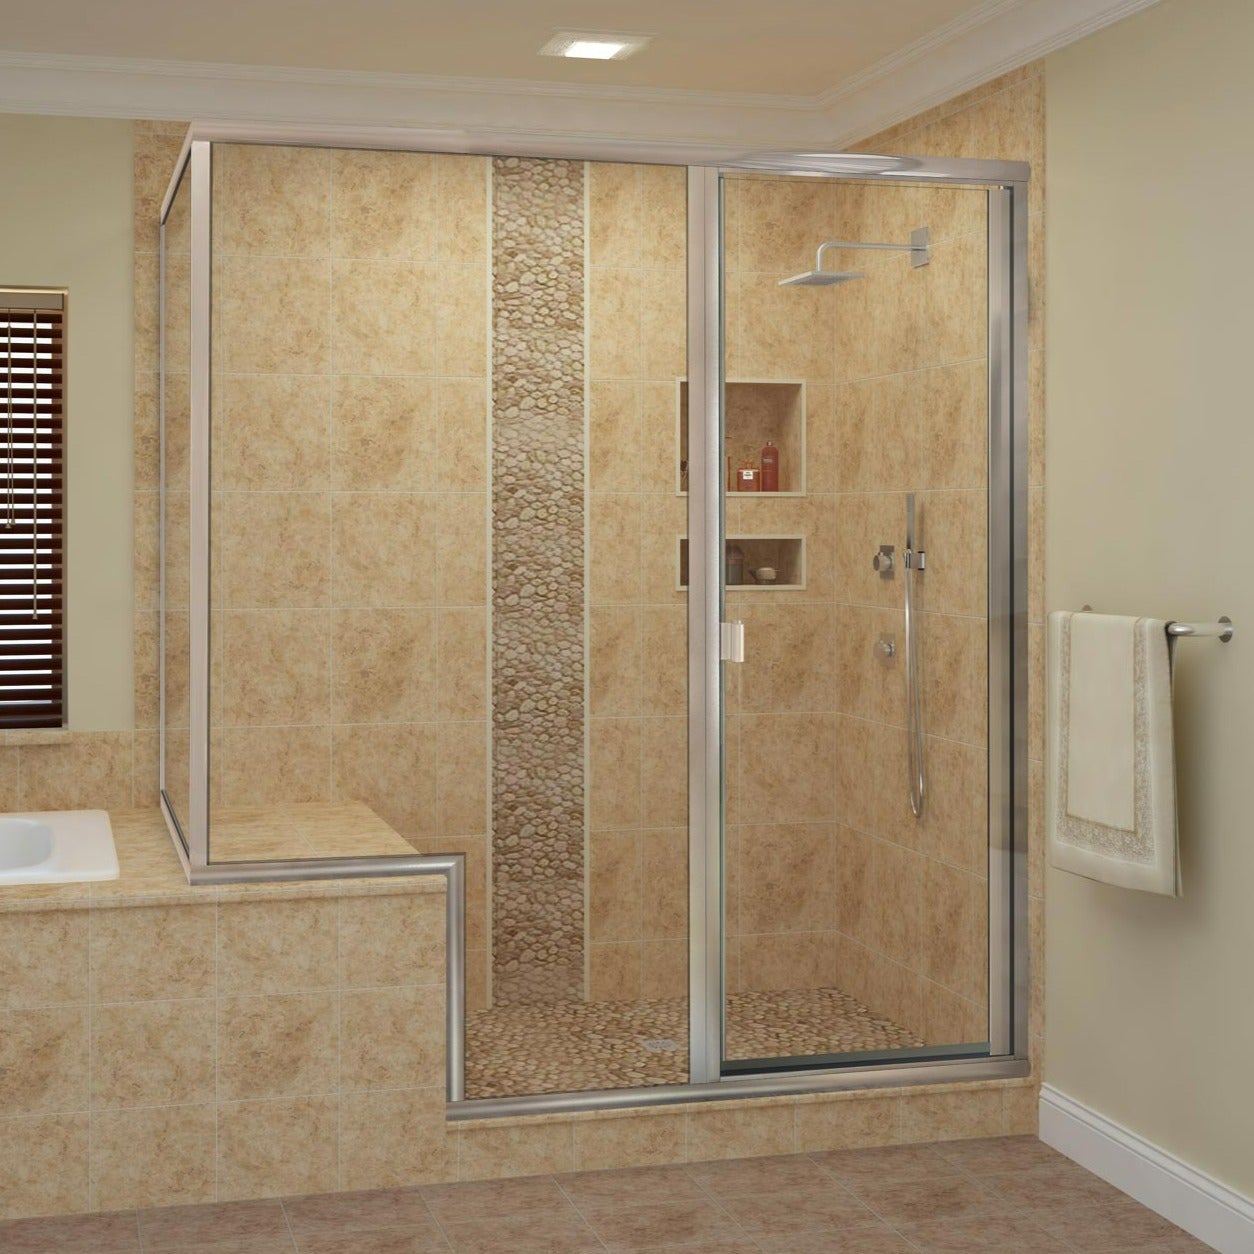 Holcam semi-frameless glass swing shower door with buttress